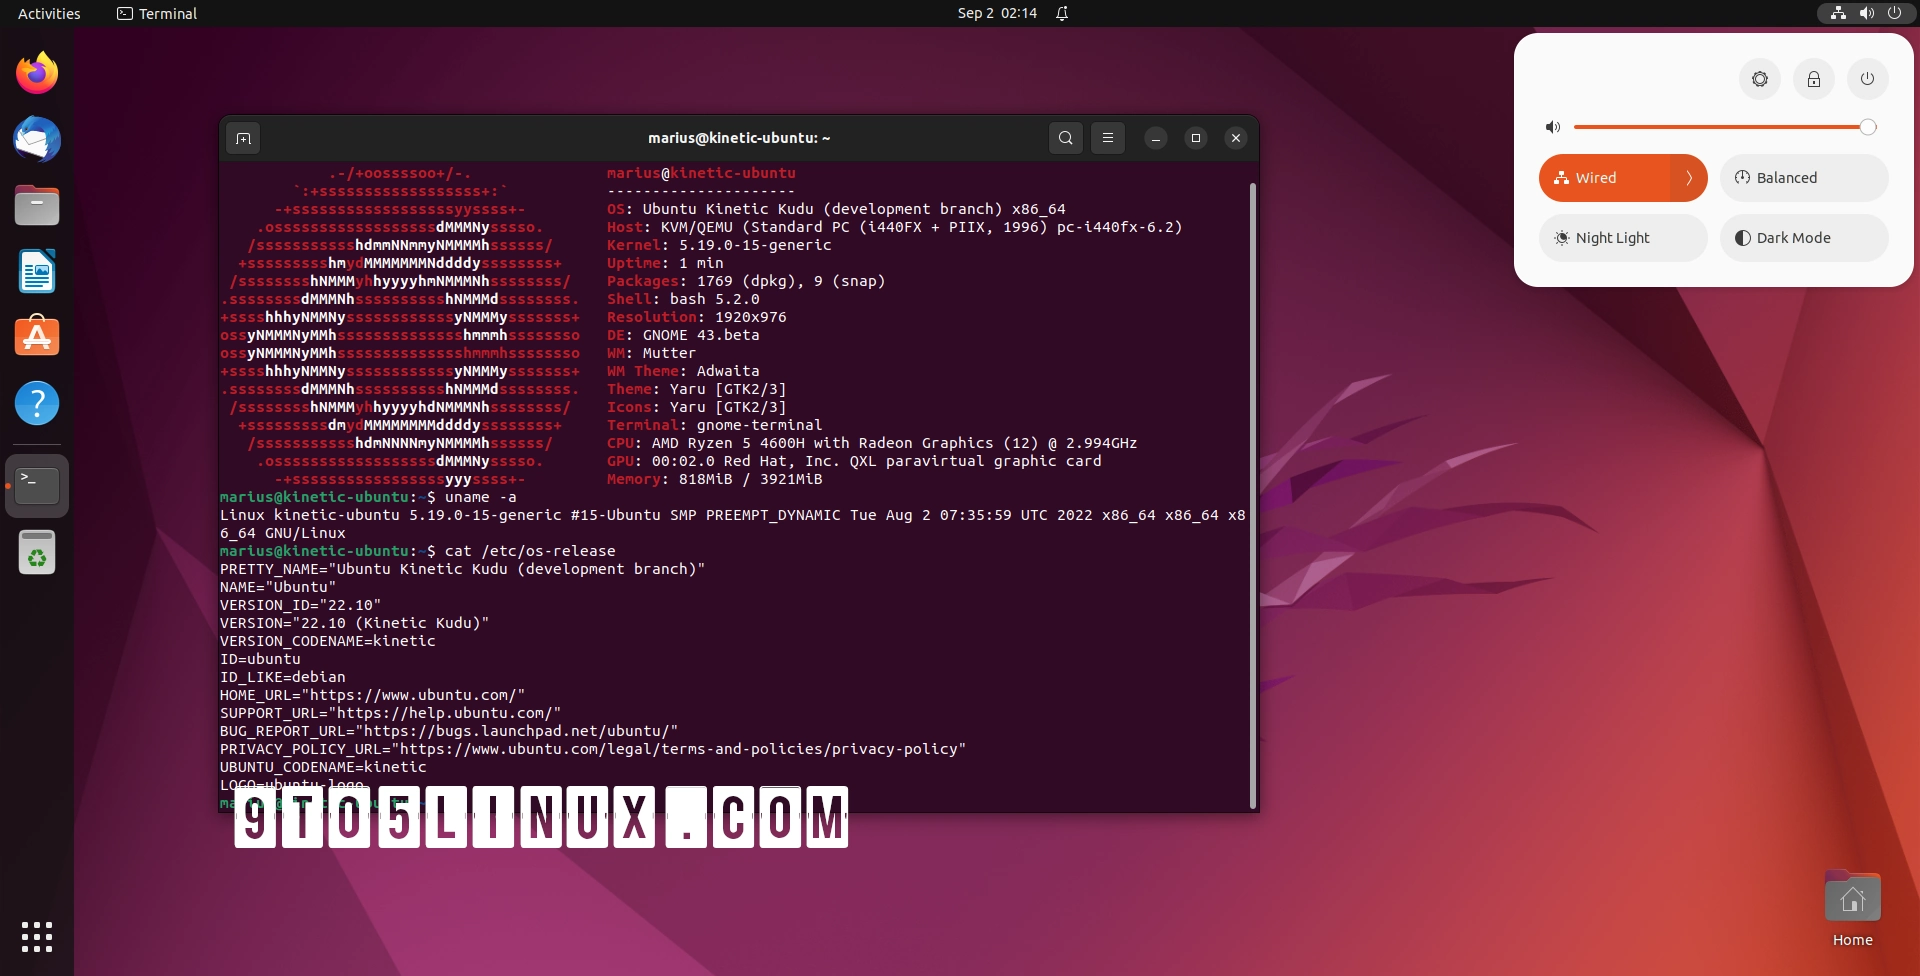 Looks Like Ubuntu 22.10 (Kinetic Kudu) Will Be Powered by Linux Kernel 5.19